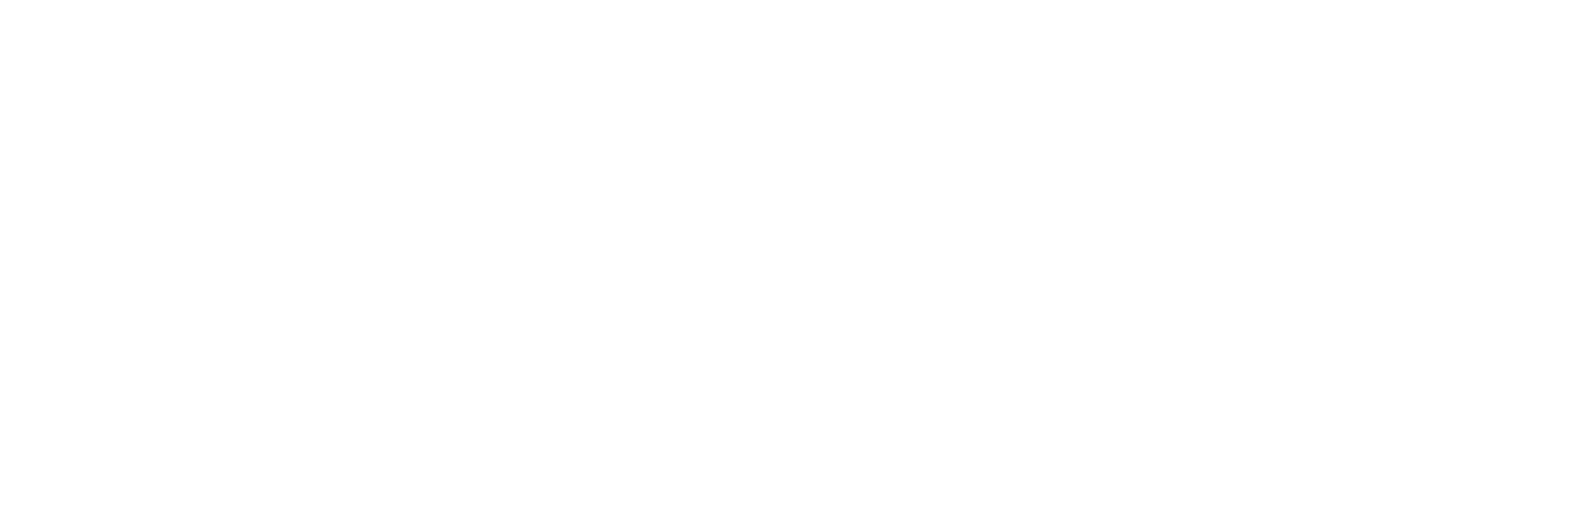 SCBA Logo - Home - South Coast Business Alliance (SCBA)